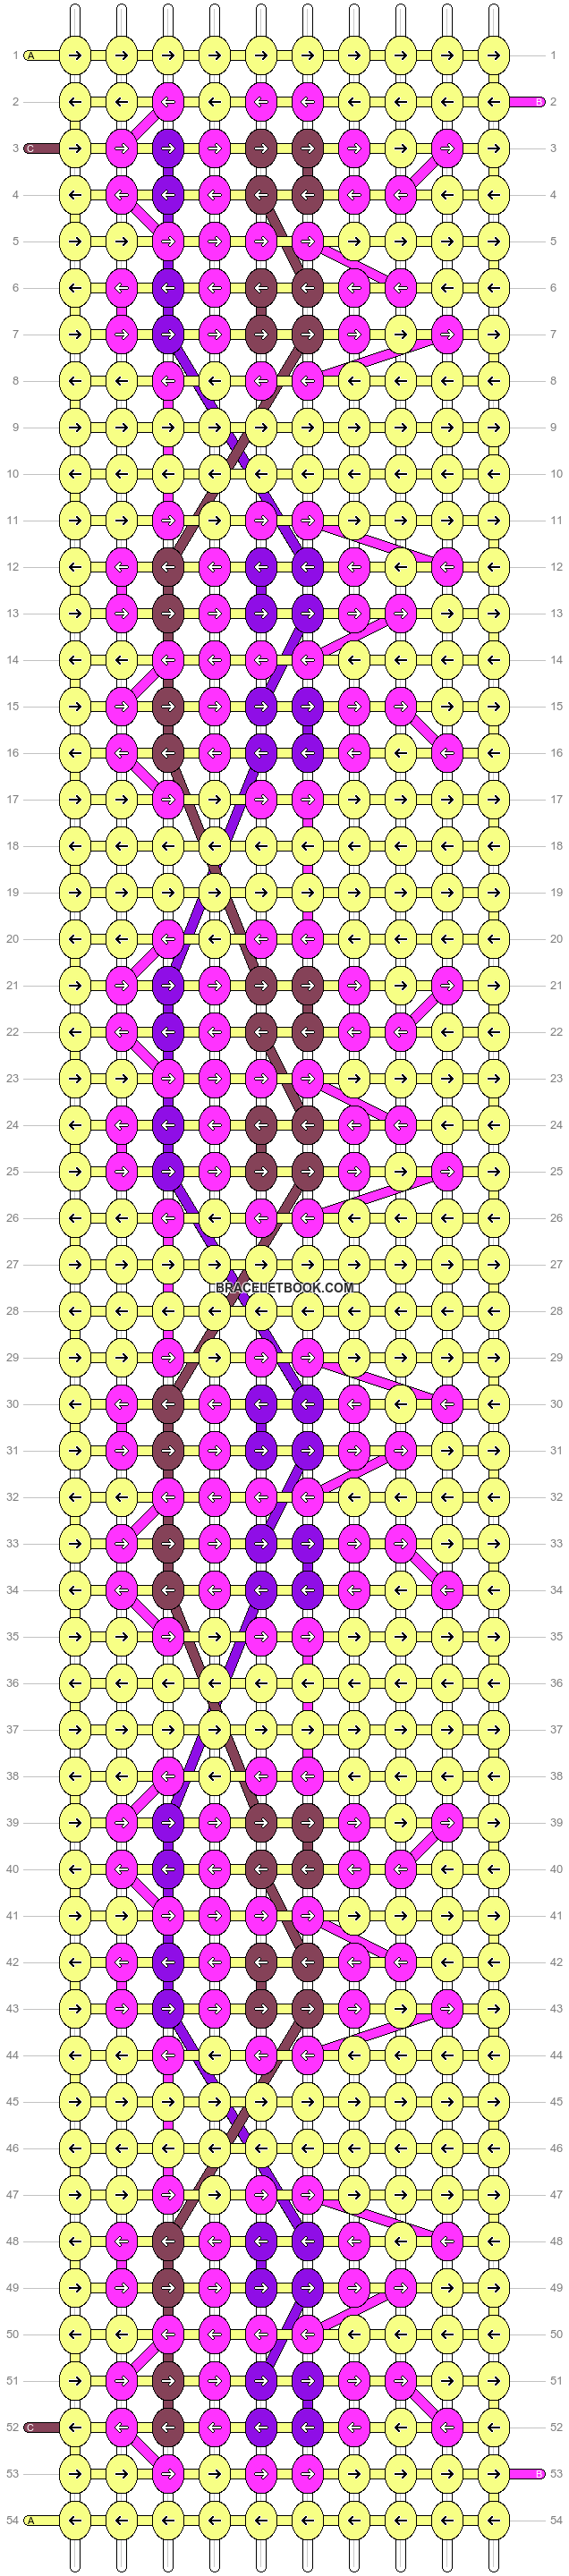 Alpha pattern #38671 variation #44428 pattern